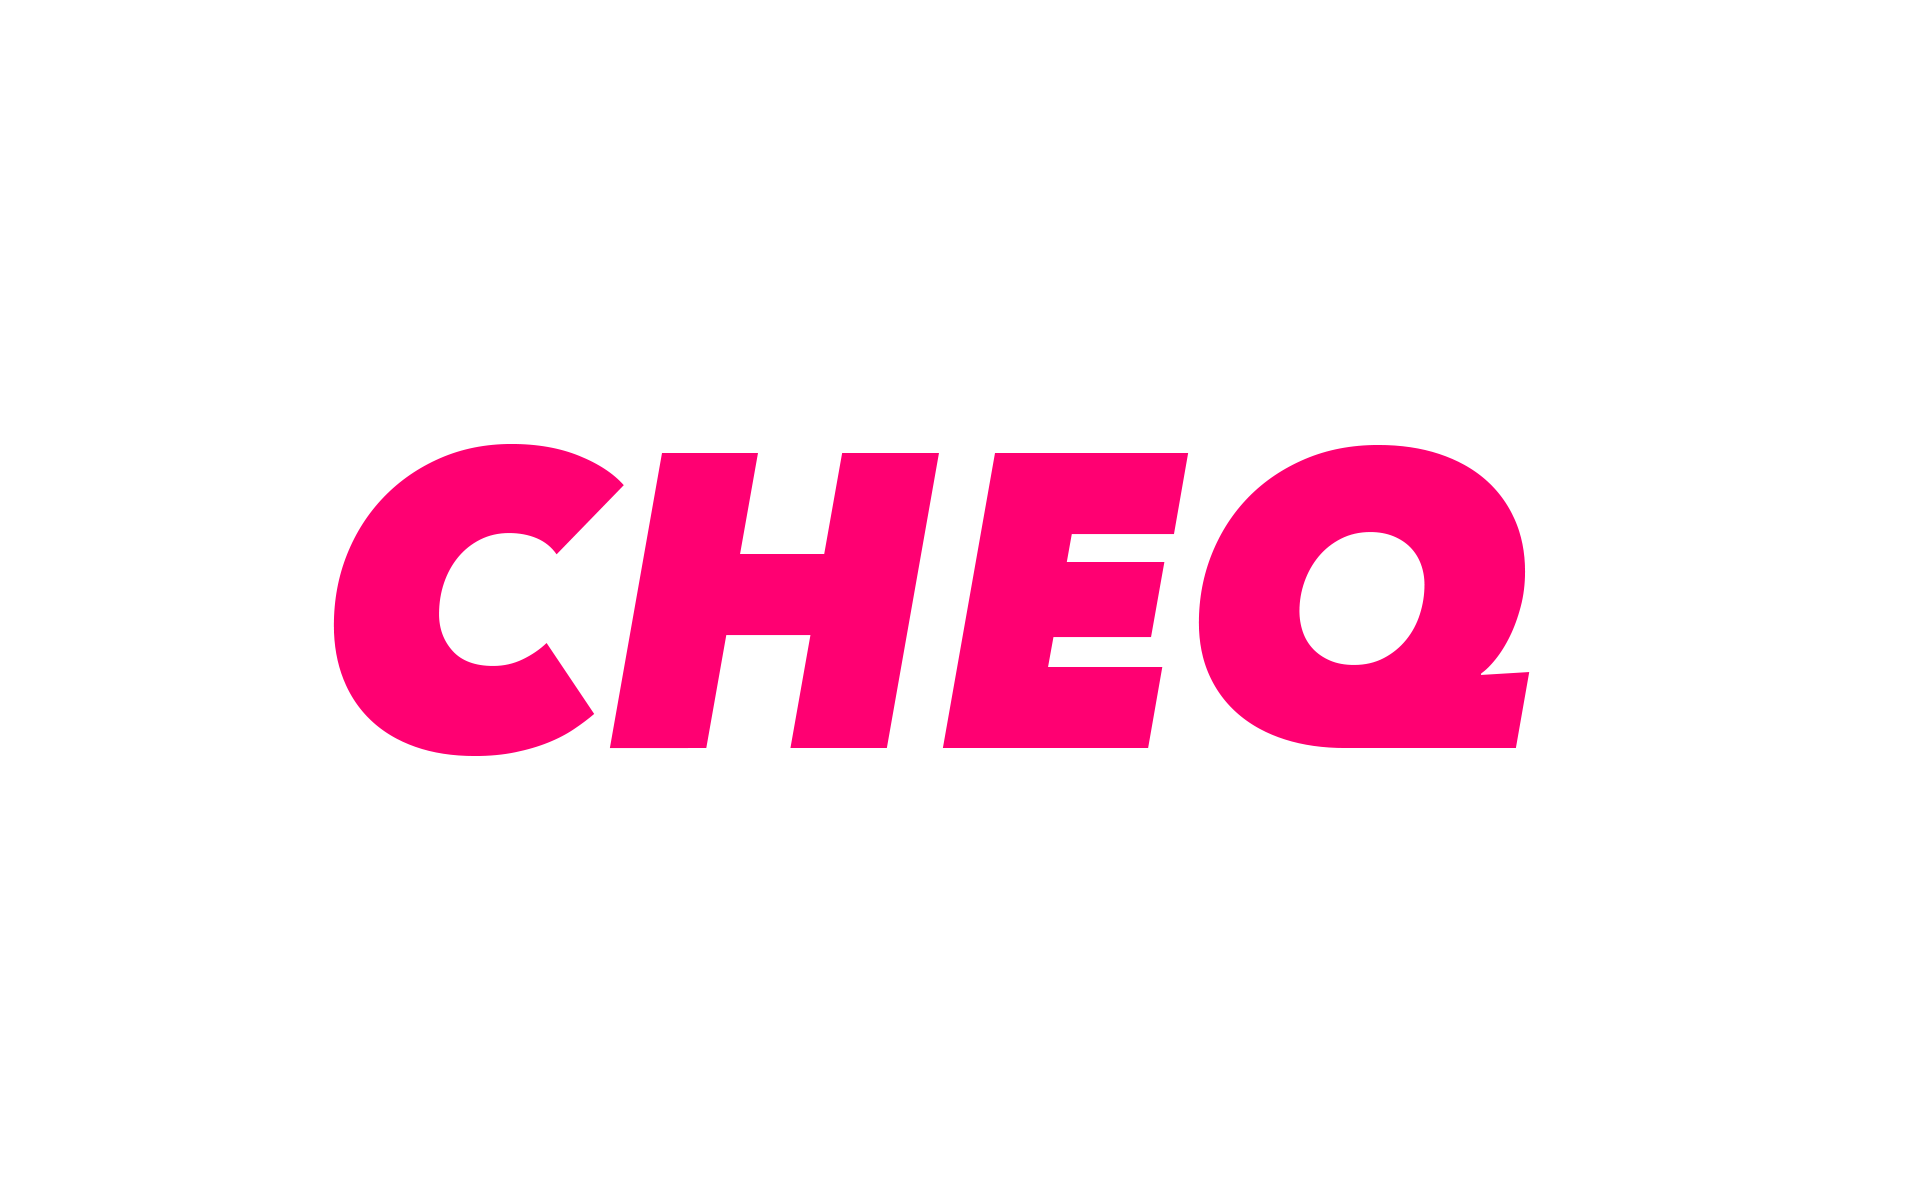 CHEQ Logo